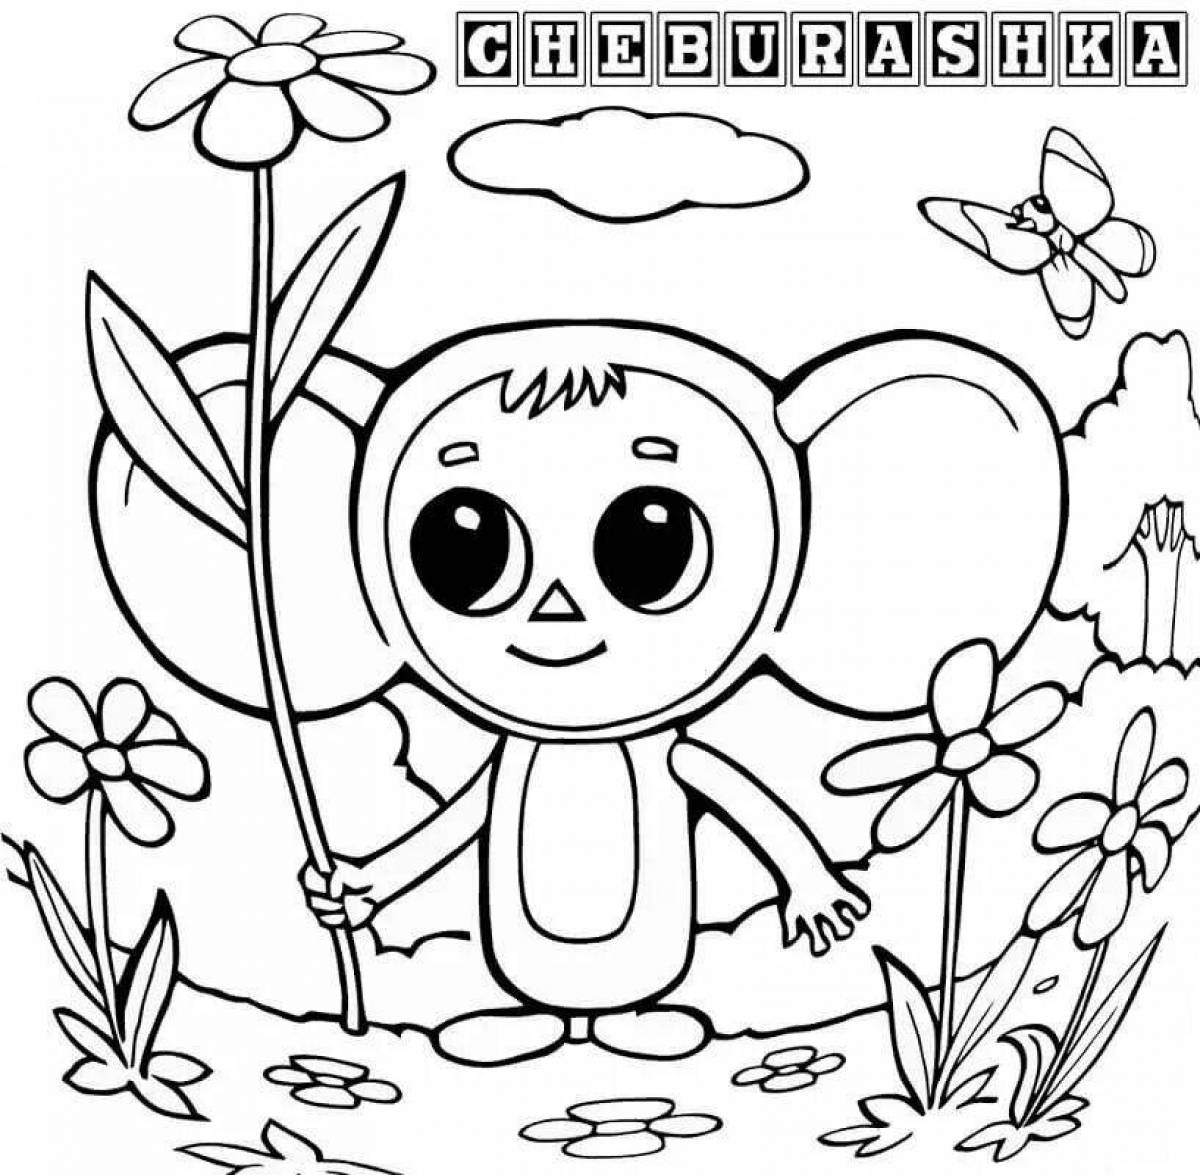 Fun coloring Cheburashka for preschoolers